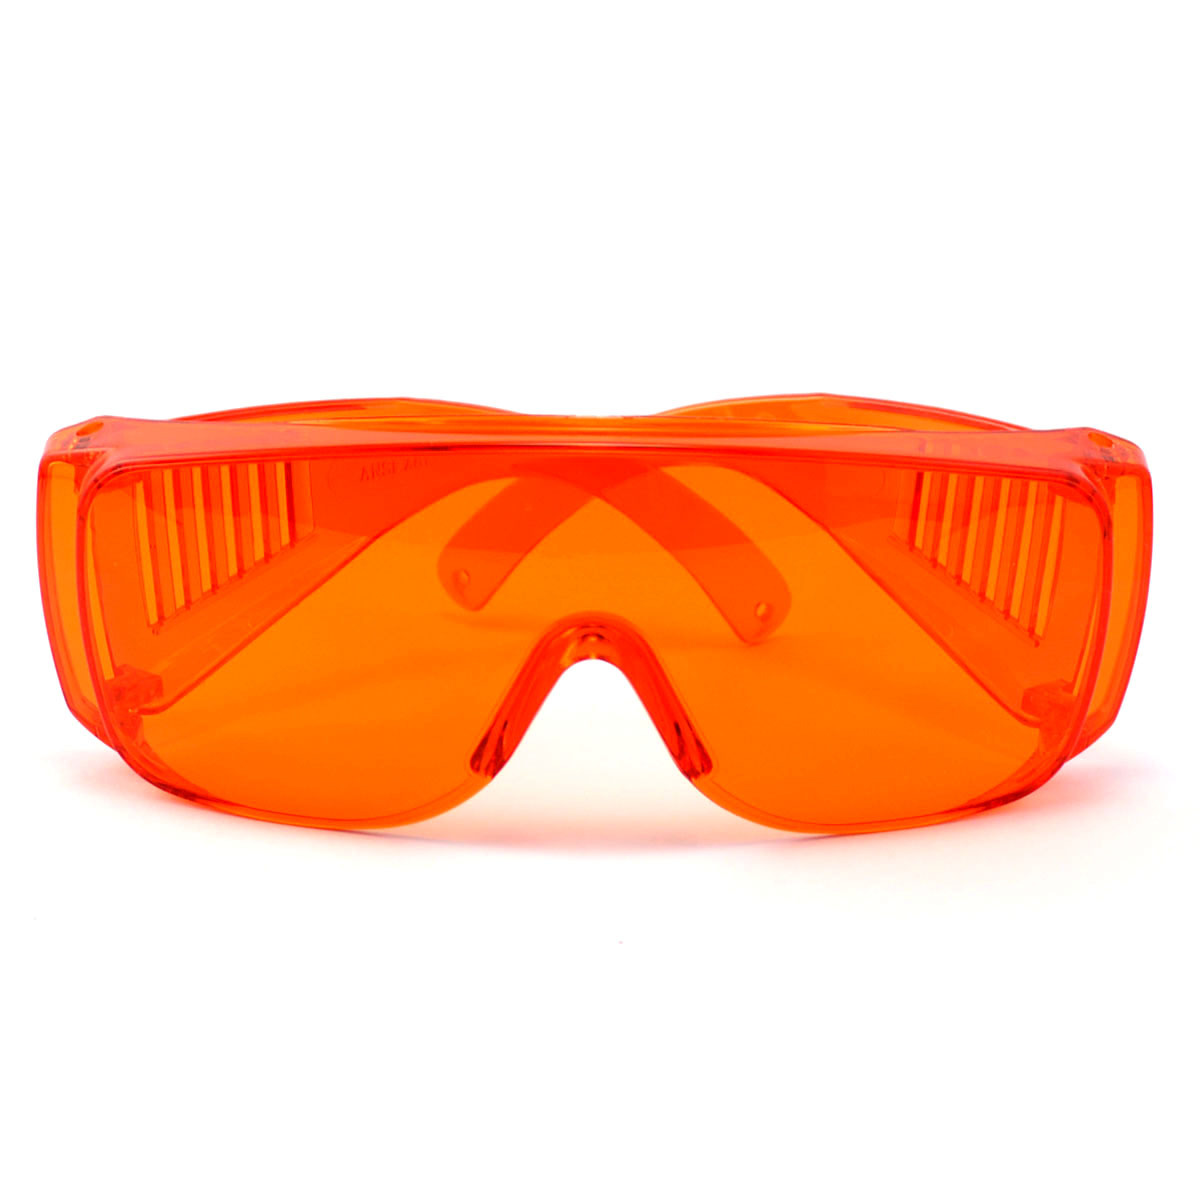 445nm-Blue-violet-Laser-Protective-Goggles-OD4-200-540nm-Eye-Protection-Safety-Glasses-Orange-1382708